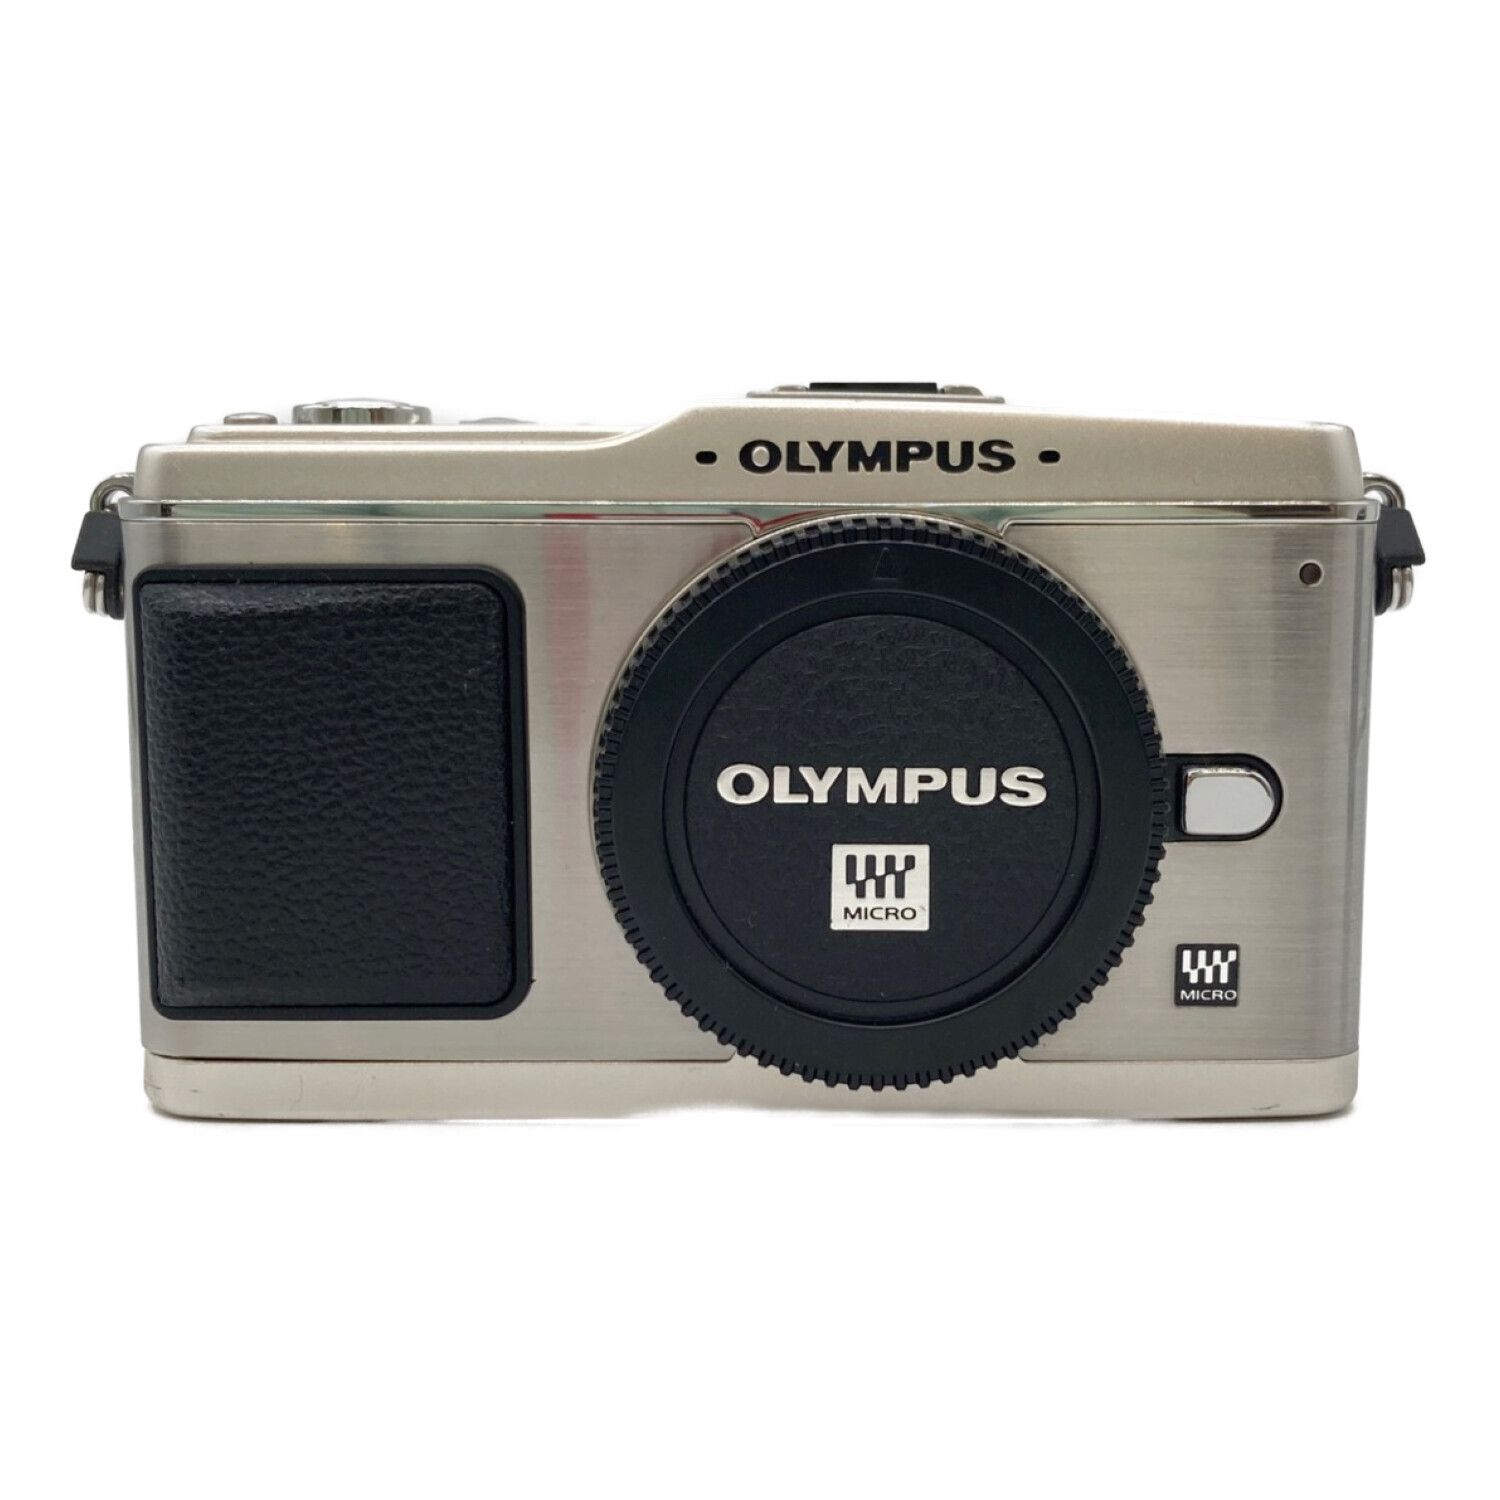 OLYMPUS (オリンパス) ミラーレス一眼レフカメラ E-P1 1310万 